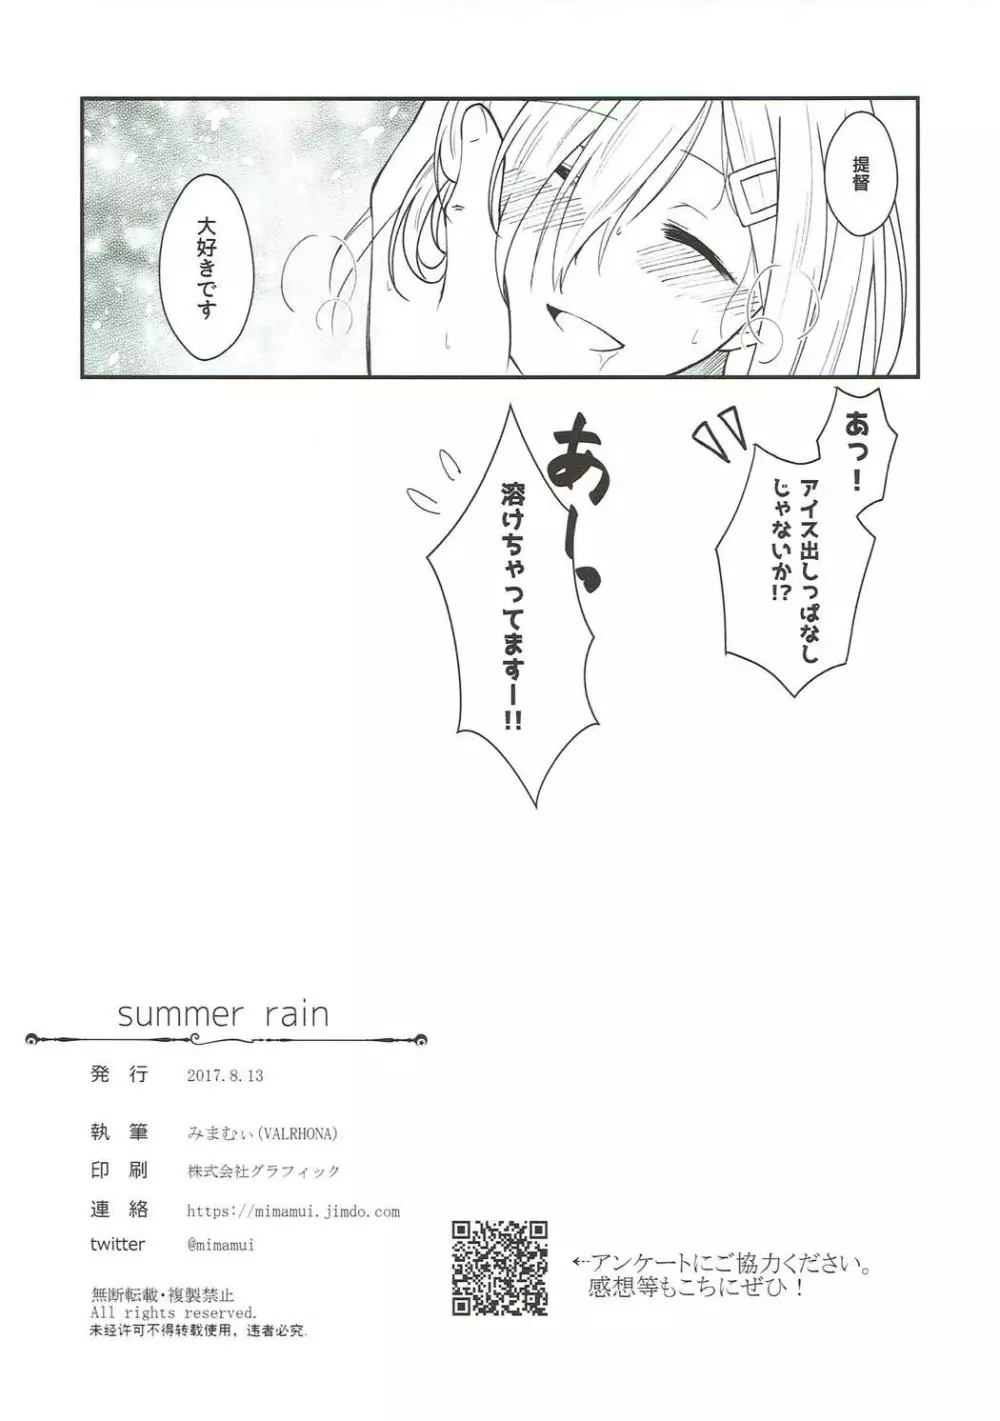 Summer rain - page16